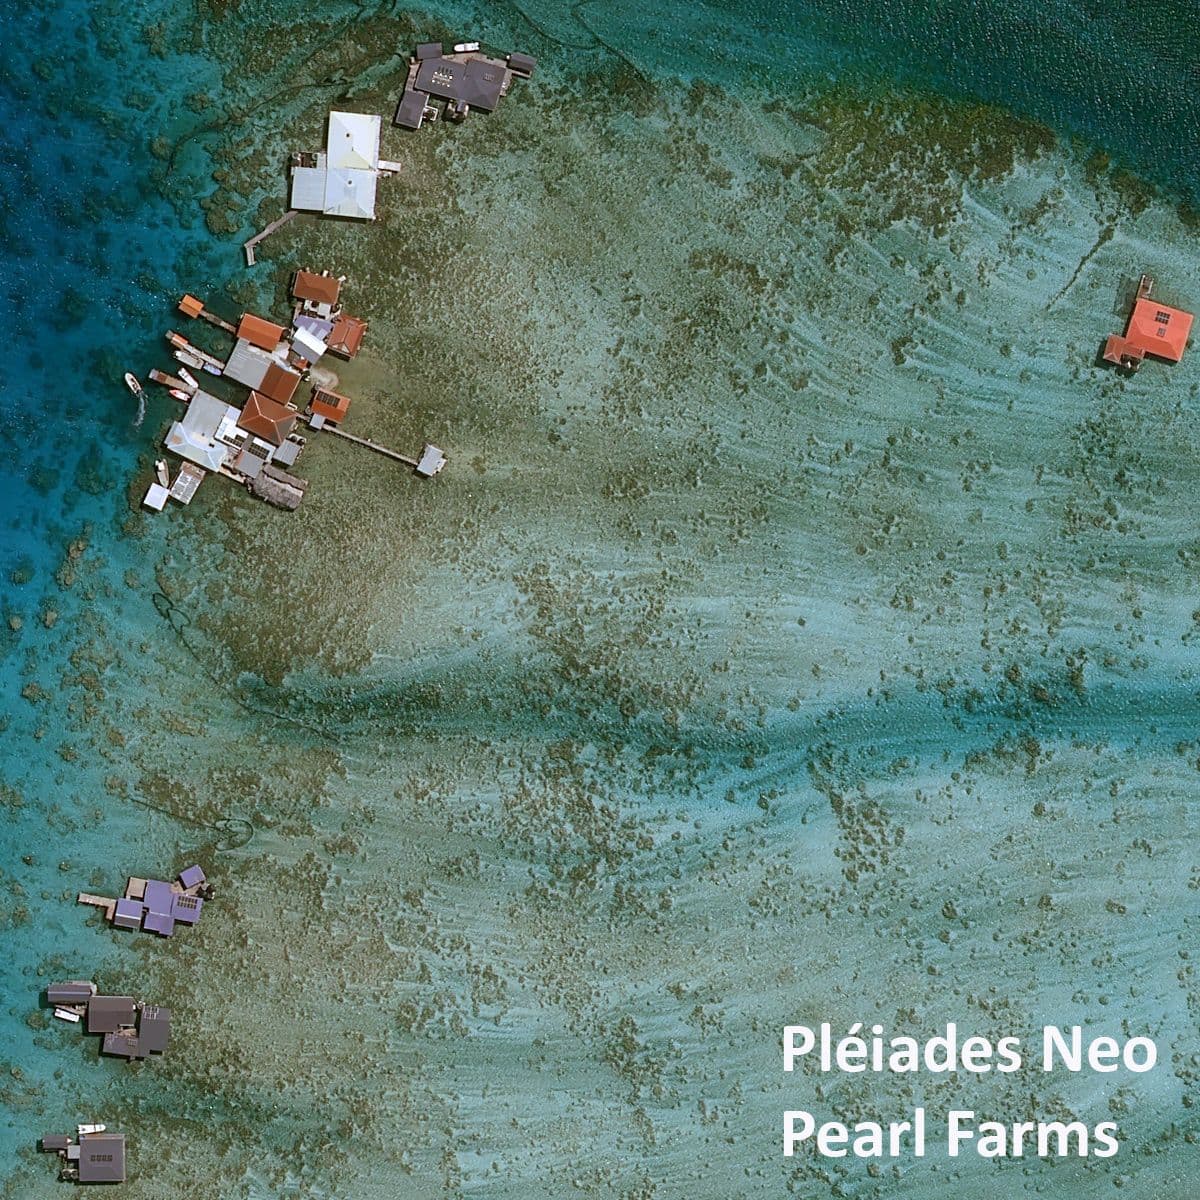 Arutua_Pleiades_Neo_pearl farms.jpg